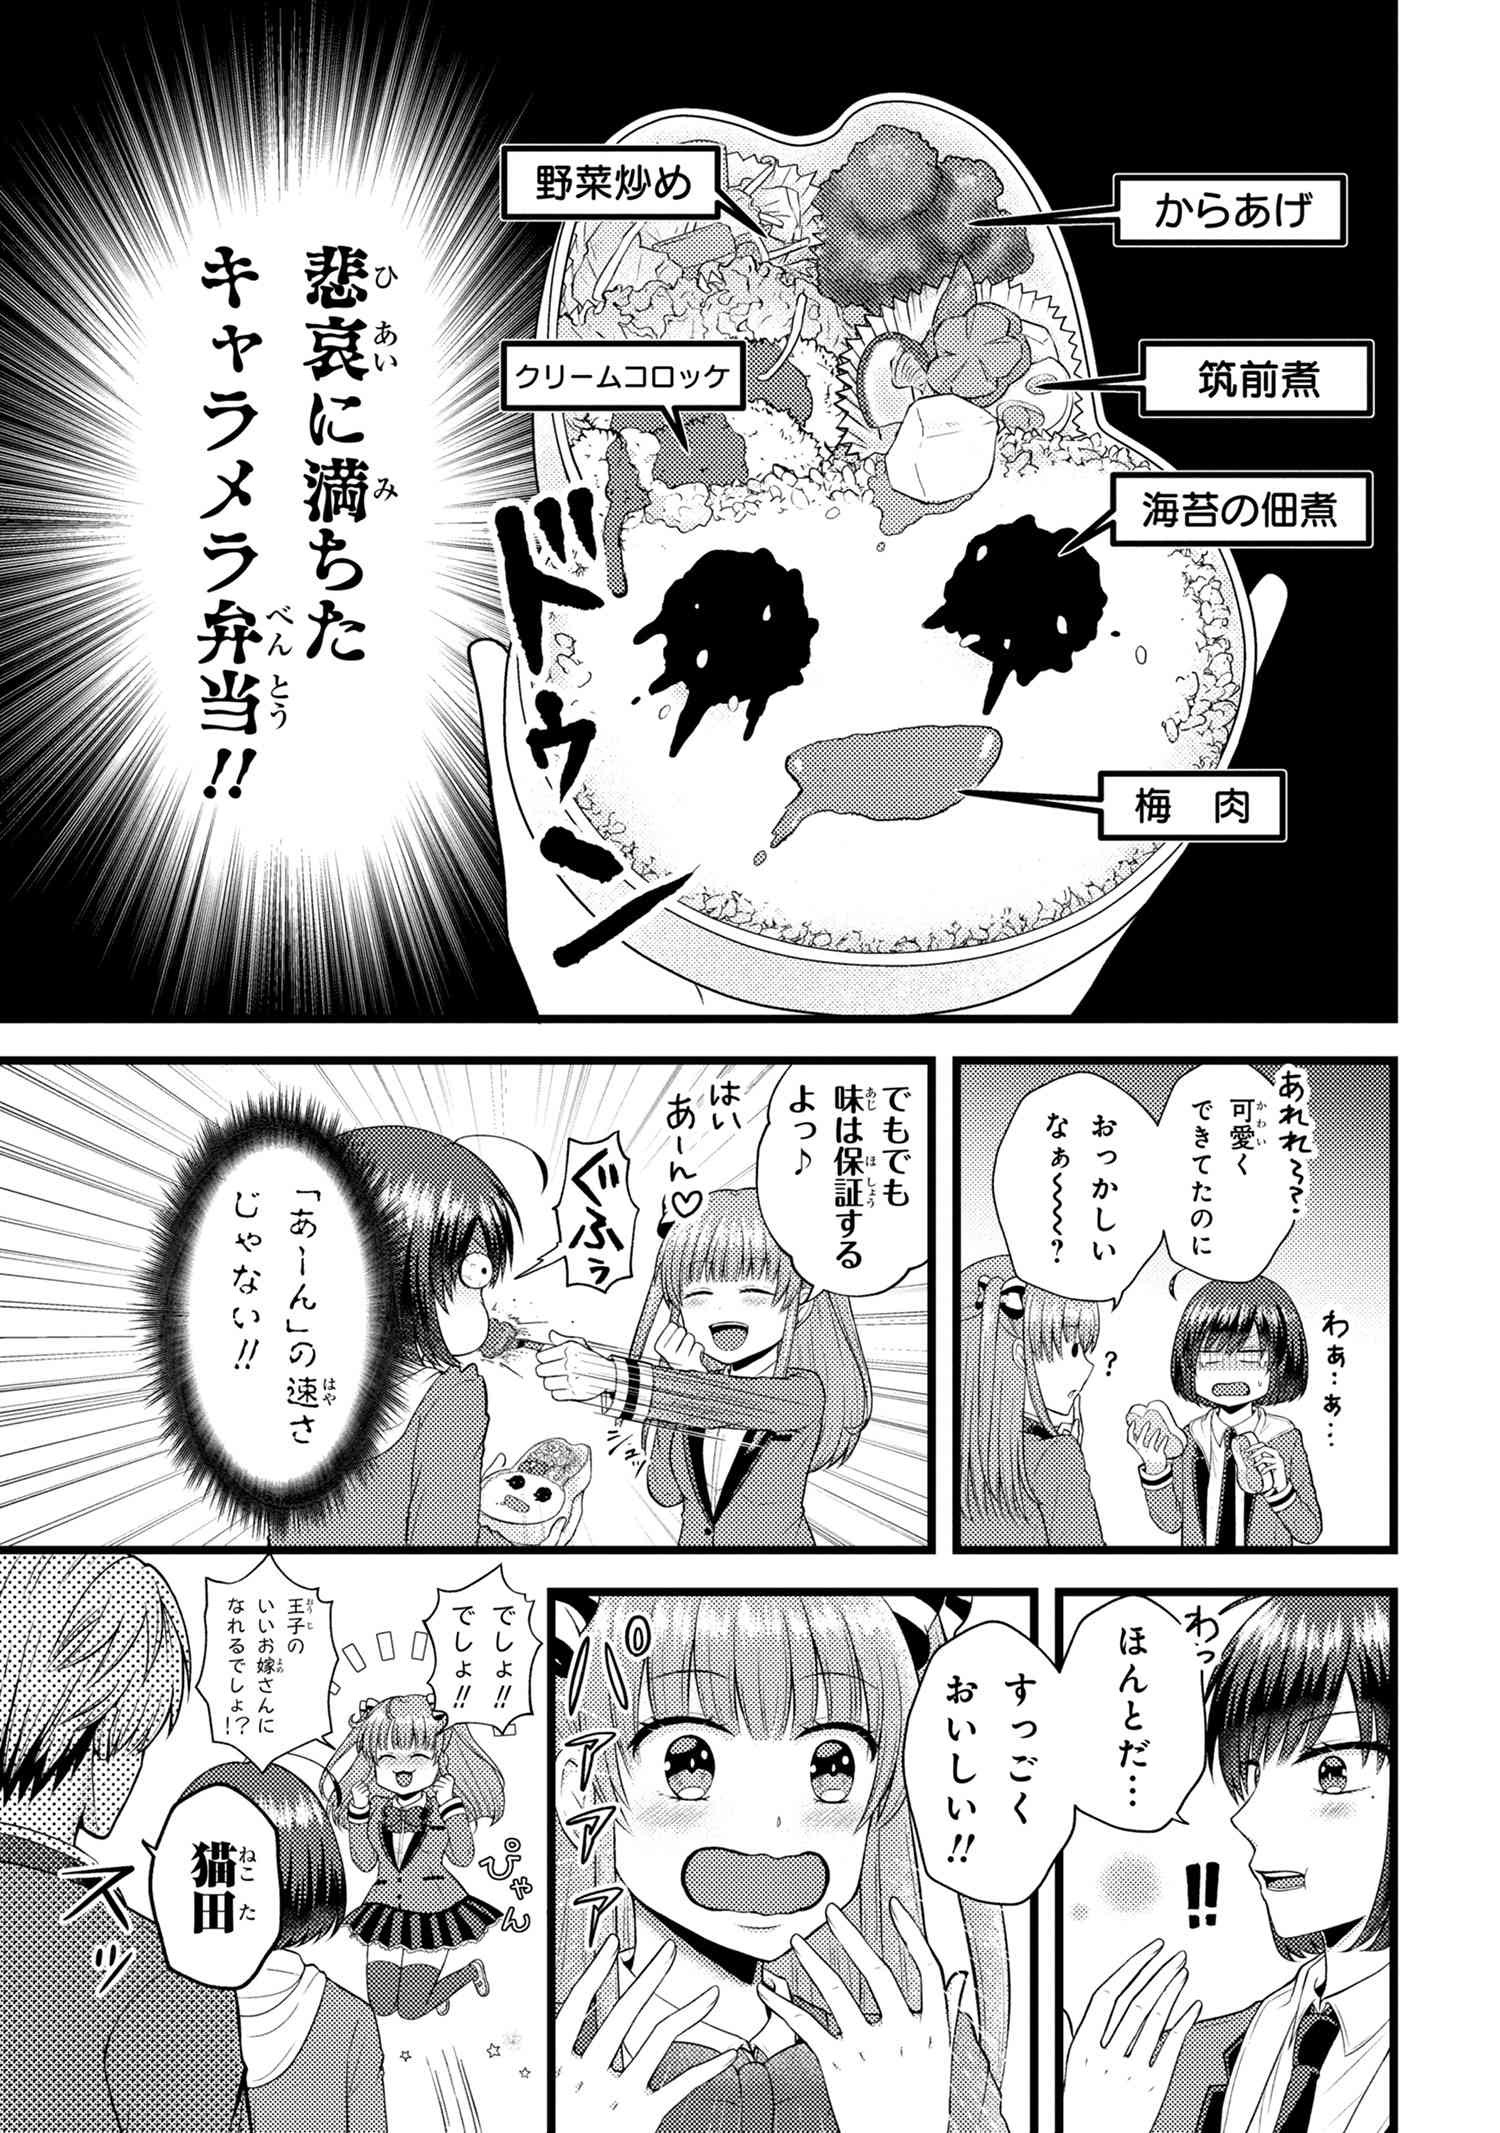 Tomodachi Inai Nekota-san to Sweets Tabetai Gokutani-kun - Chapter 5-3 - Page 2